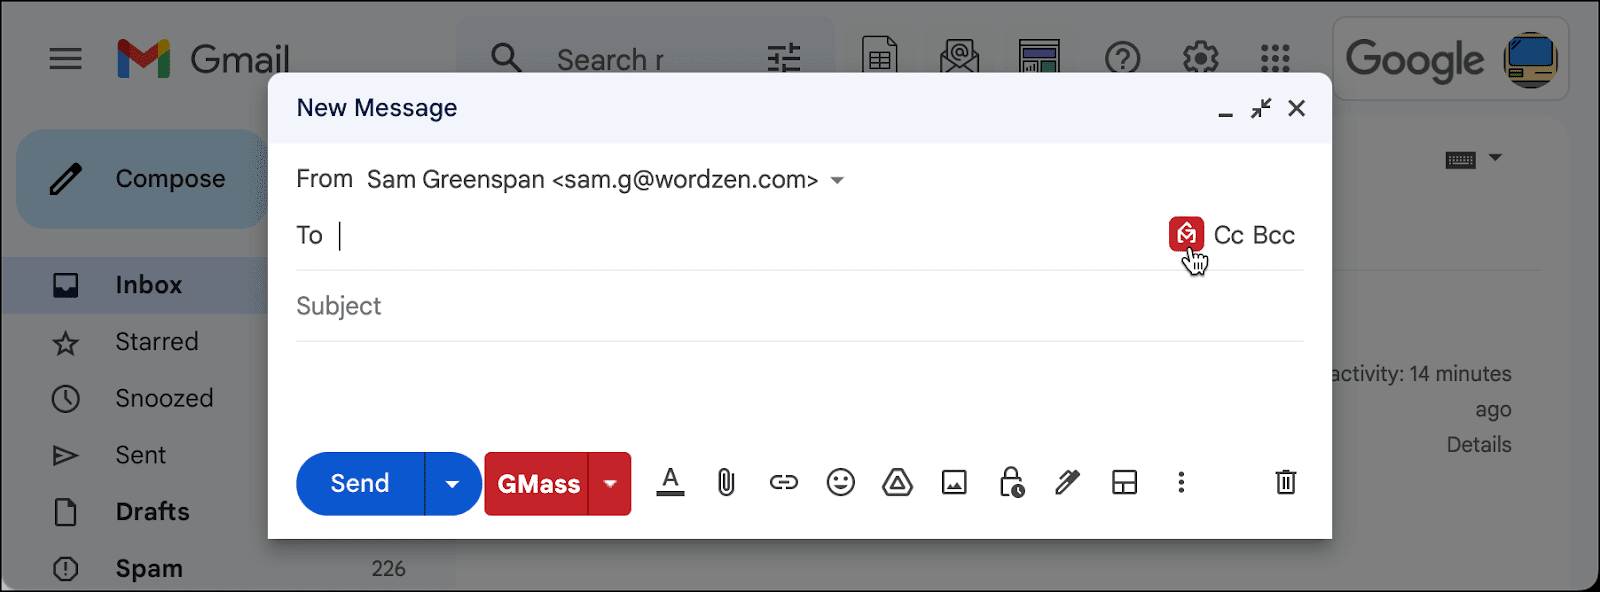 Click the GMass icon